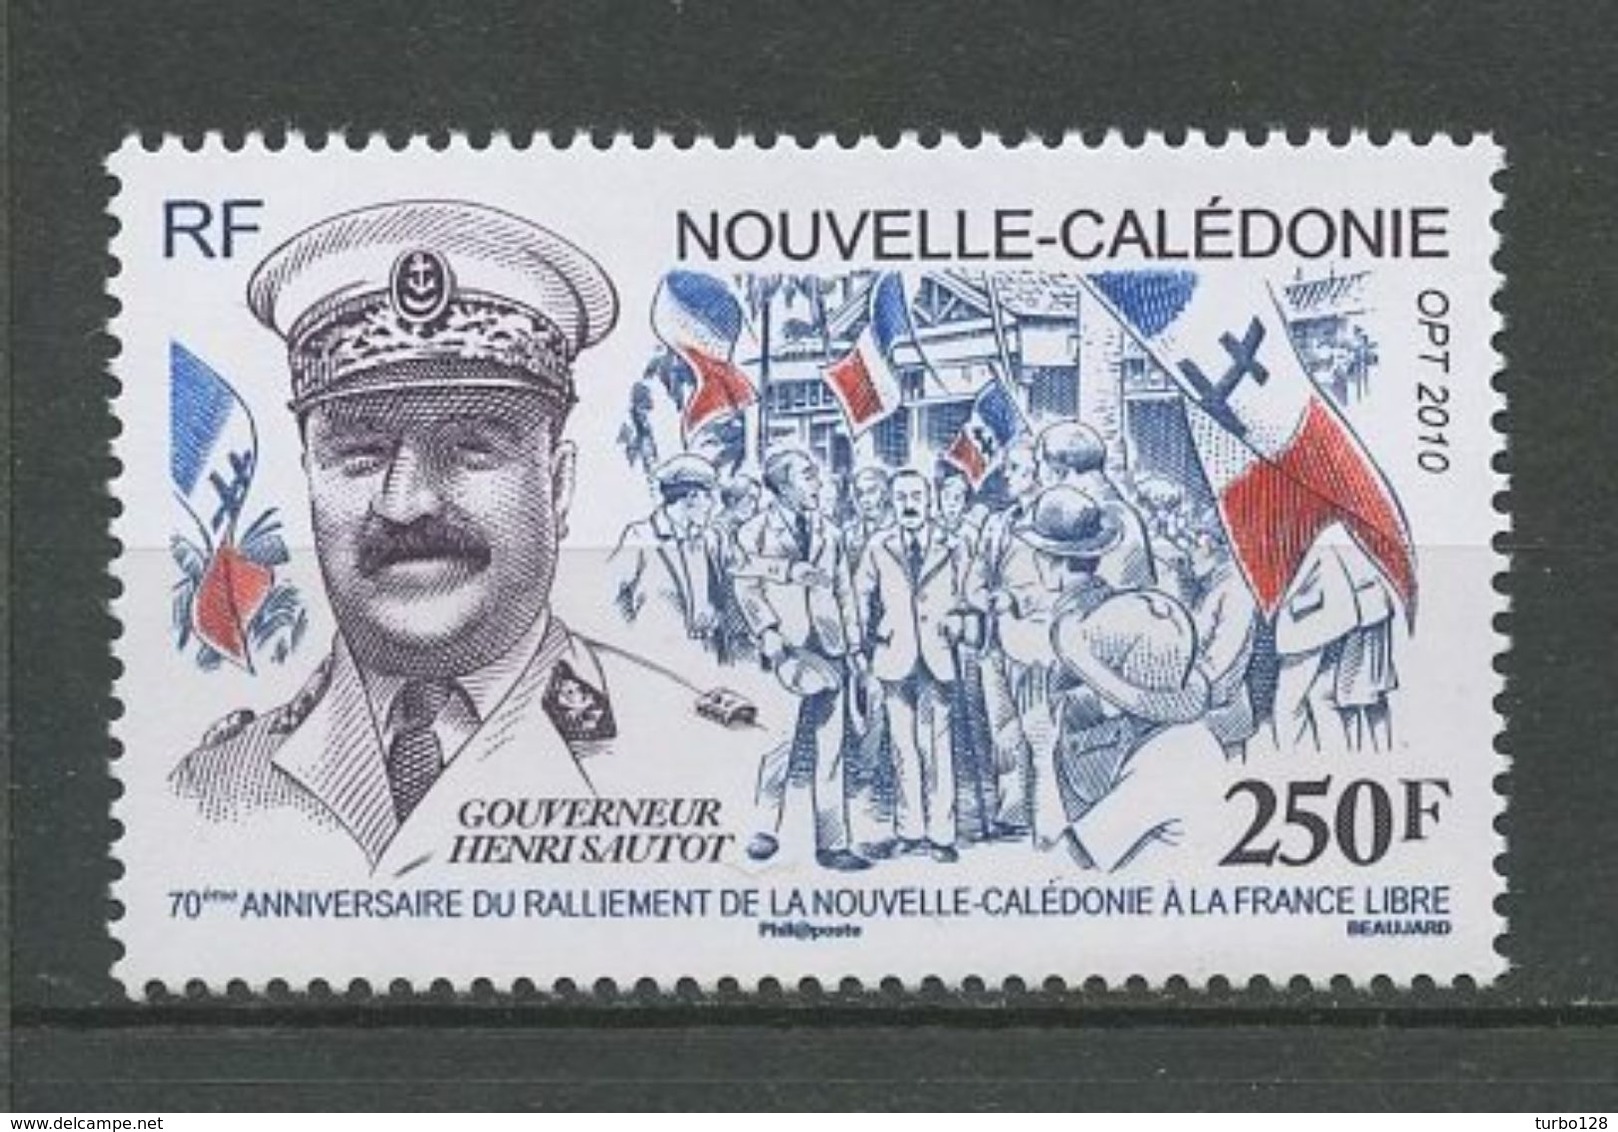 Nlle Calédonie  2010  N° 1112 **  Neuf MNH  Superbe Henri Sautot Drapeaux Flags - Unused Stamps